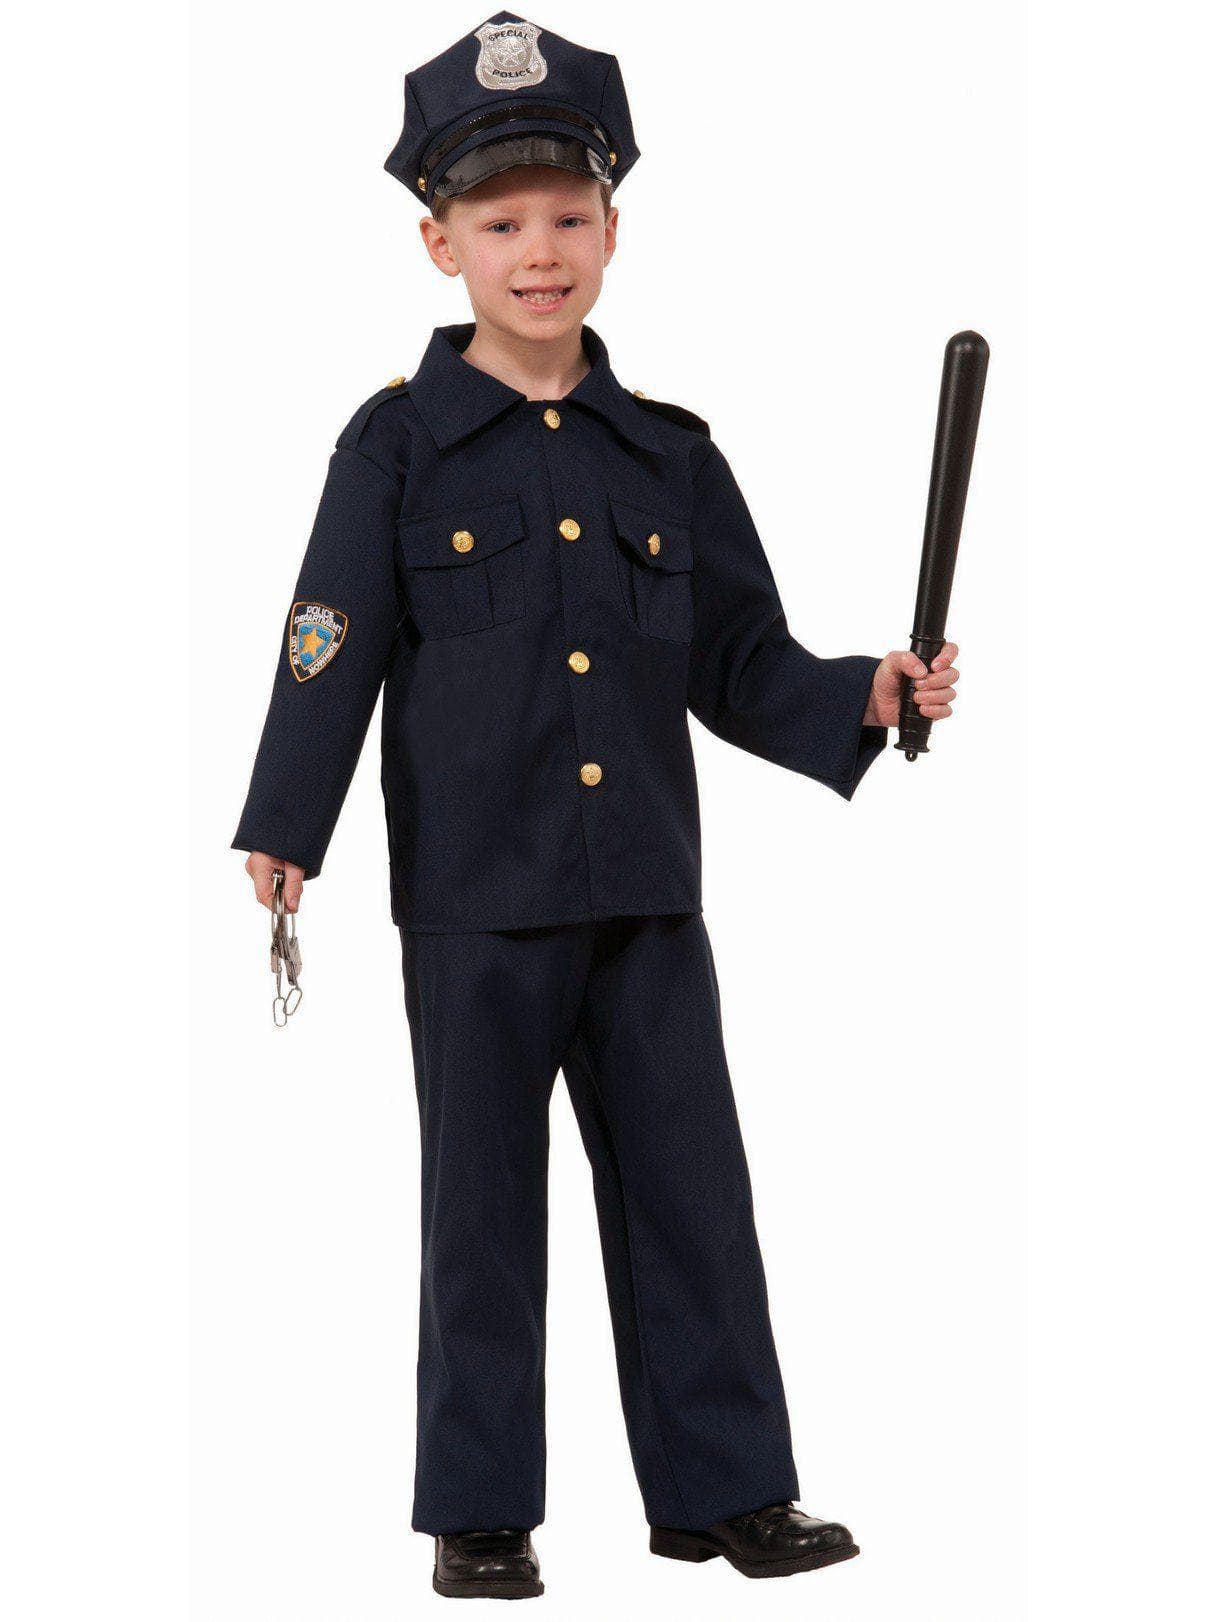 Kid's Police Boy Costume - costumes.com